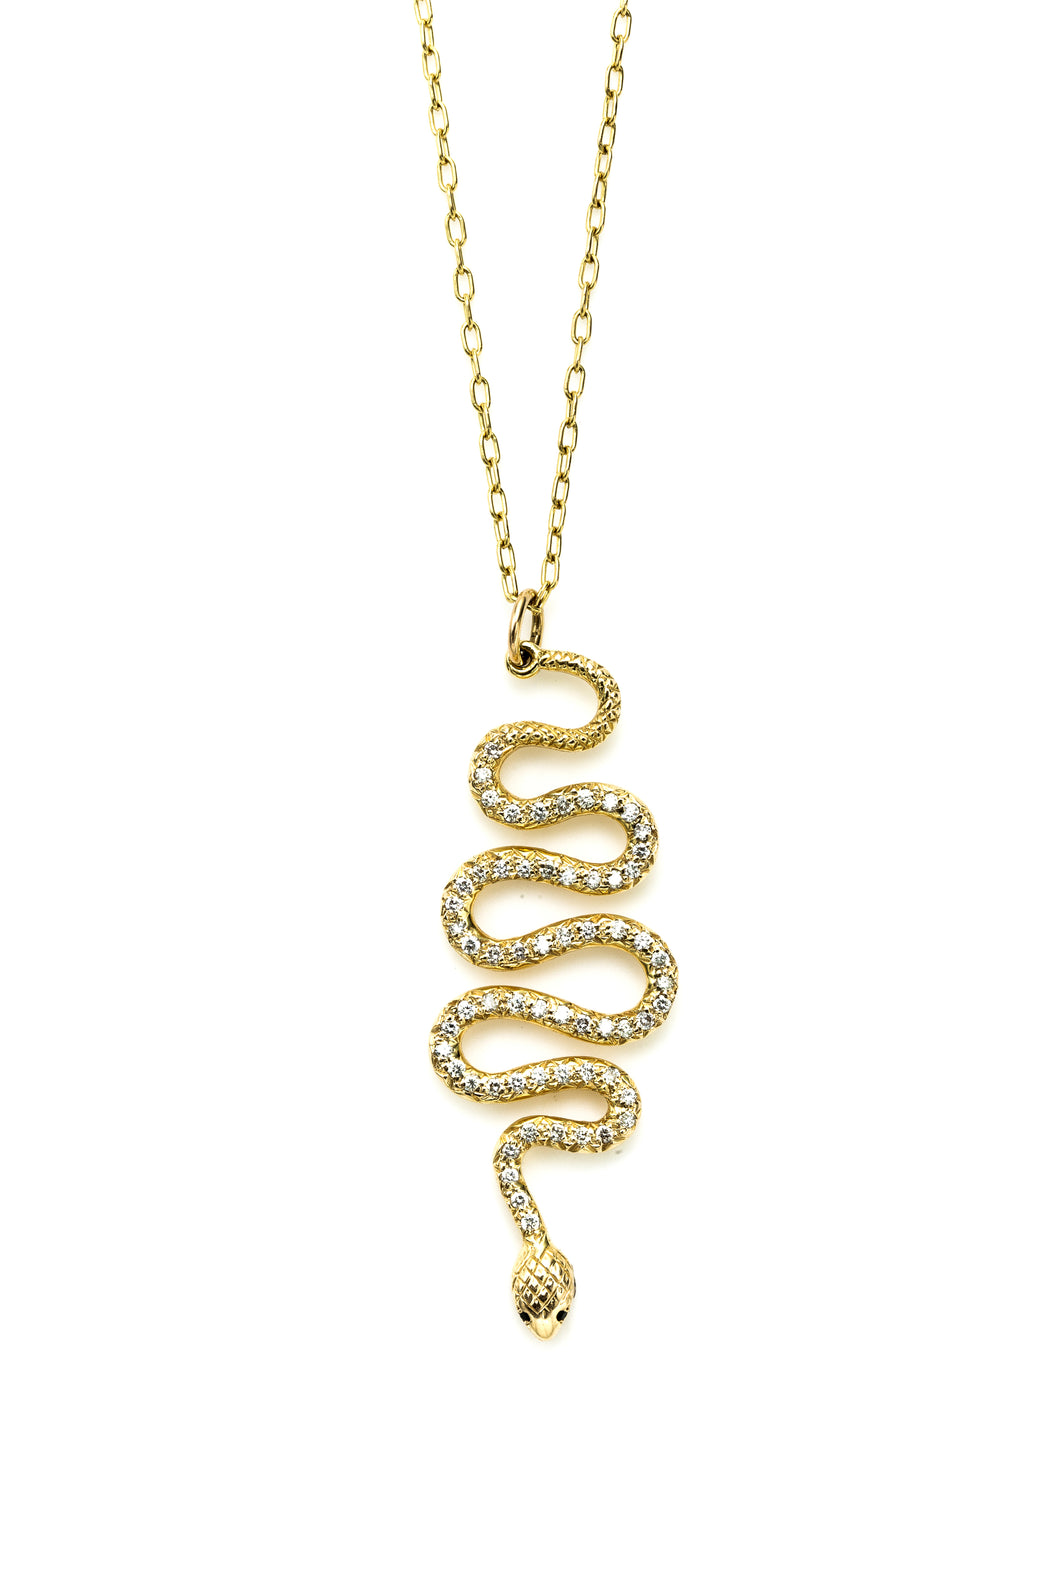 Elongated Snake | Kacey K Jewelry.